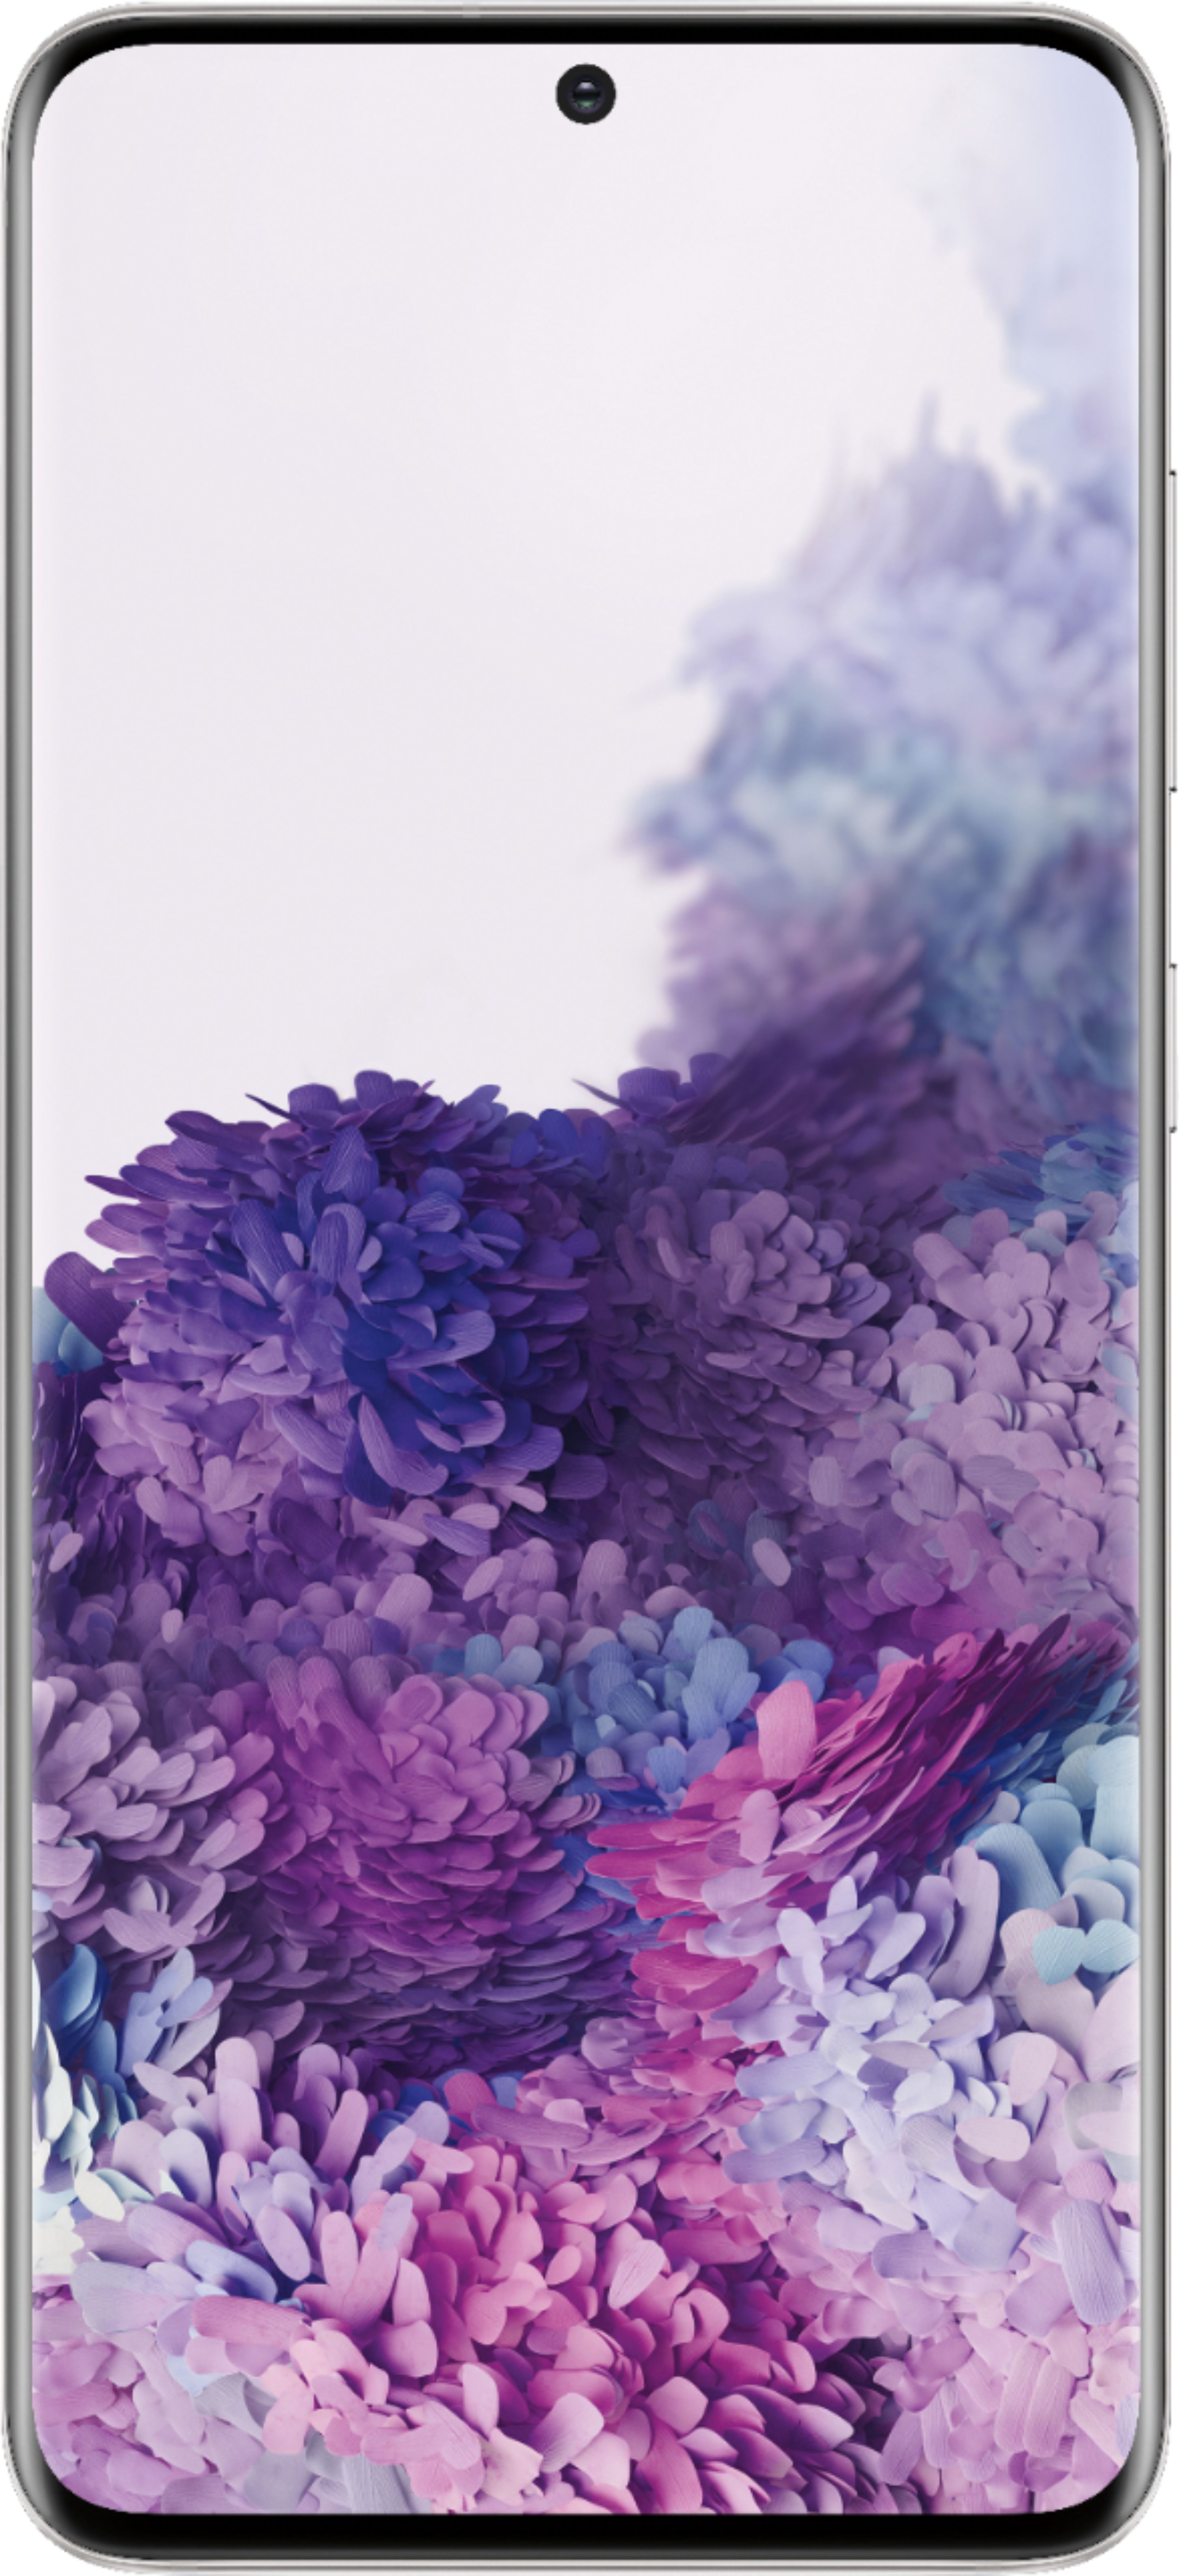 Best Buy: Samsung Galaxy S20 5G Enabled 128GB (Unlocked) Cloud